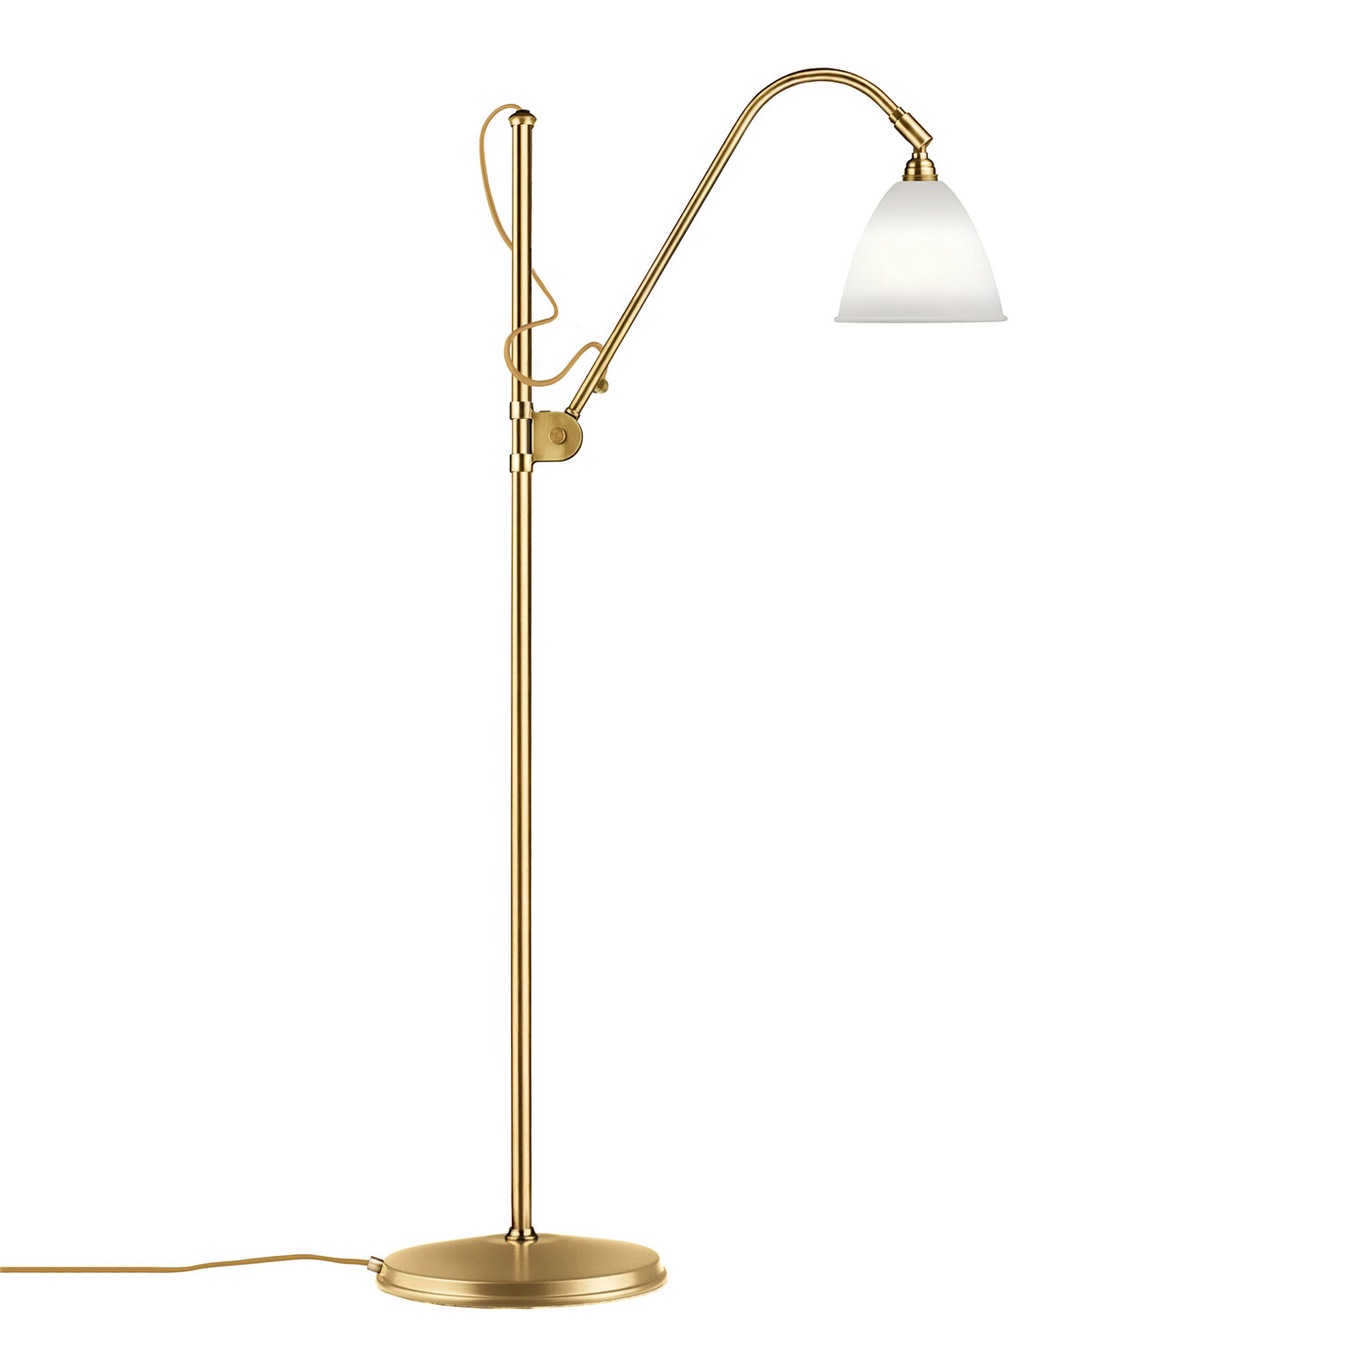 Bestlite BL3S Floor Lamp, Brass/Bone China